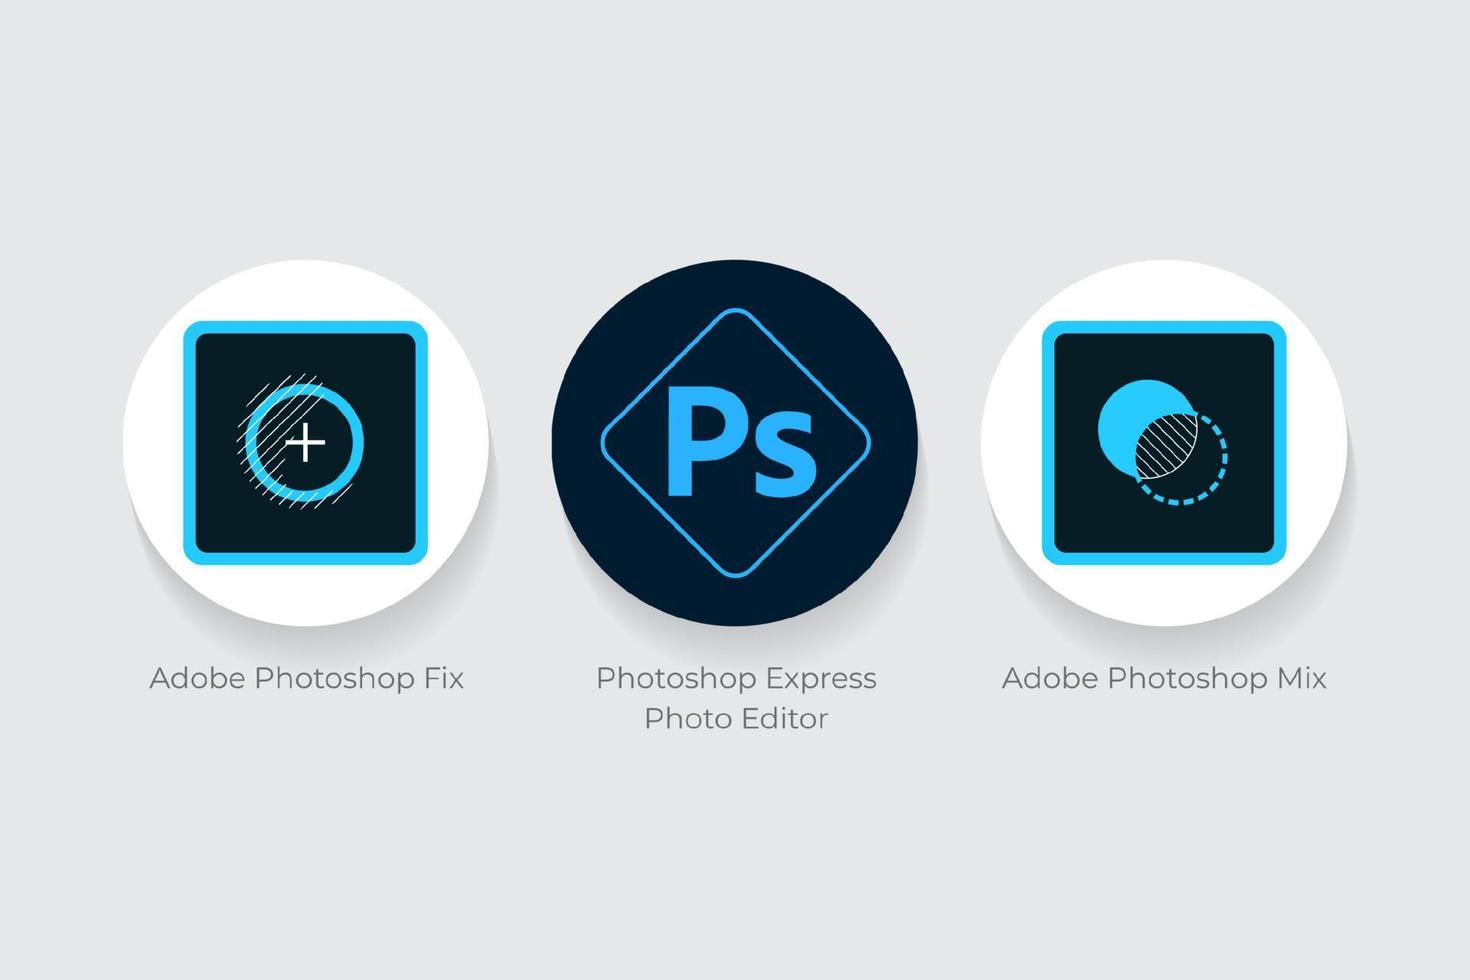 Adobe Photoshop Fix, Mix and Express Photo Editor logos vector